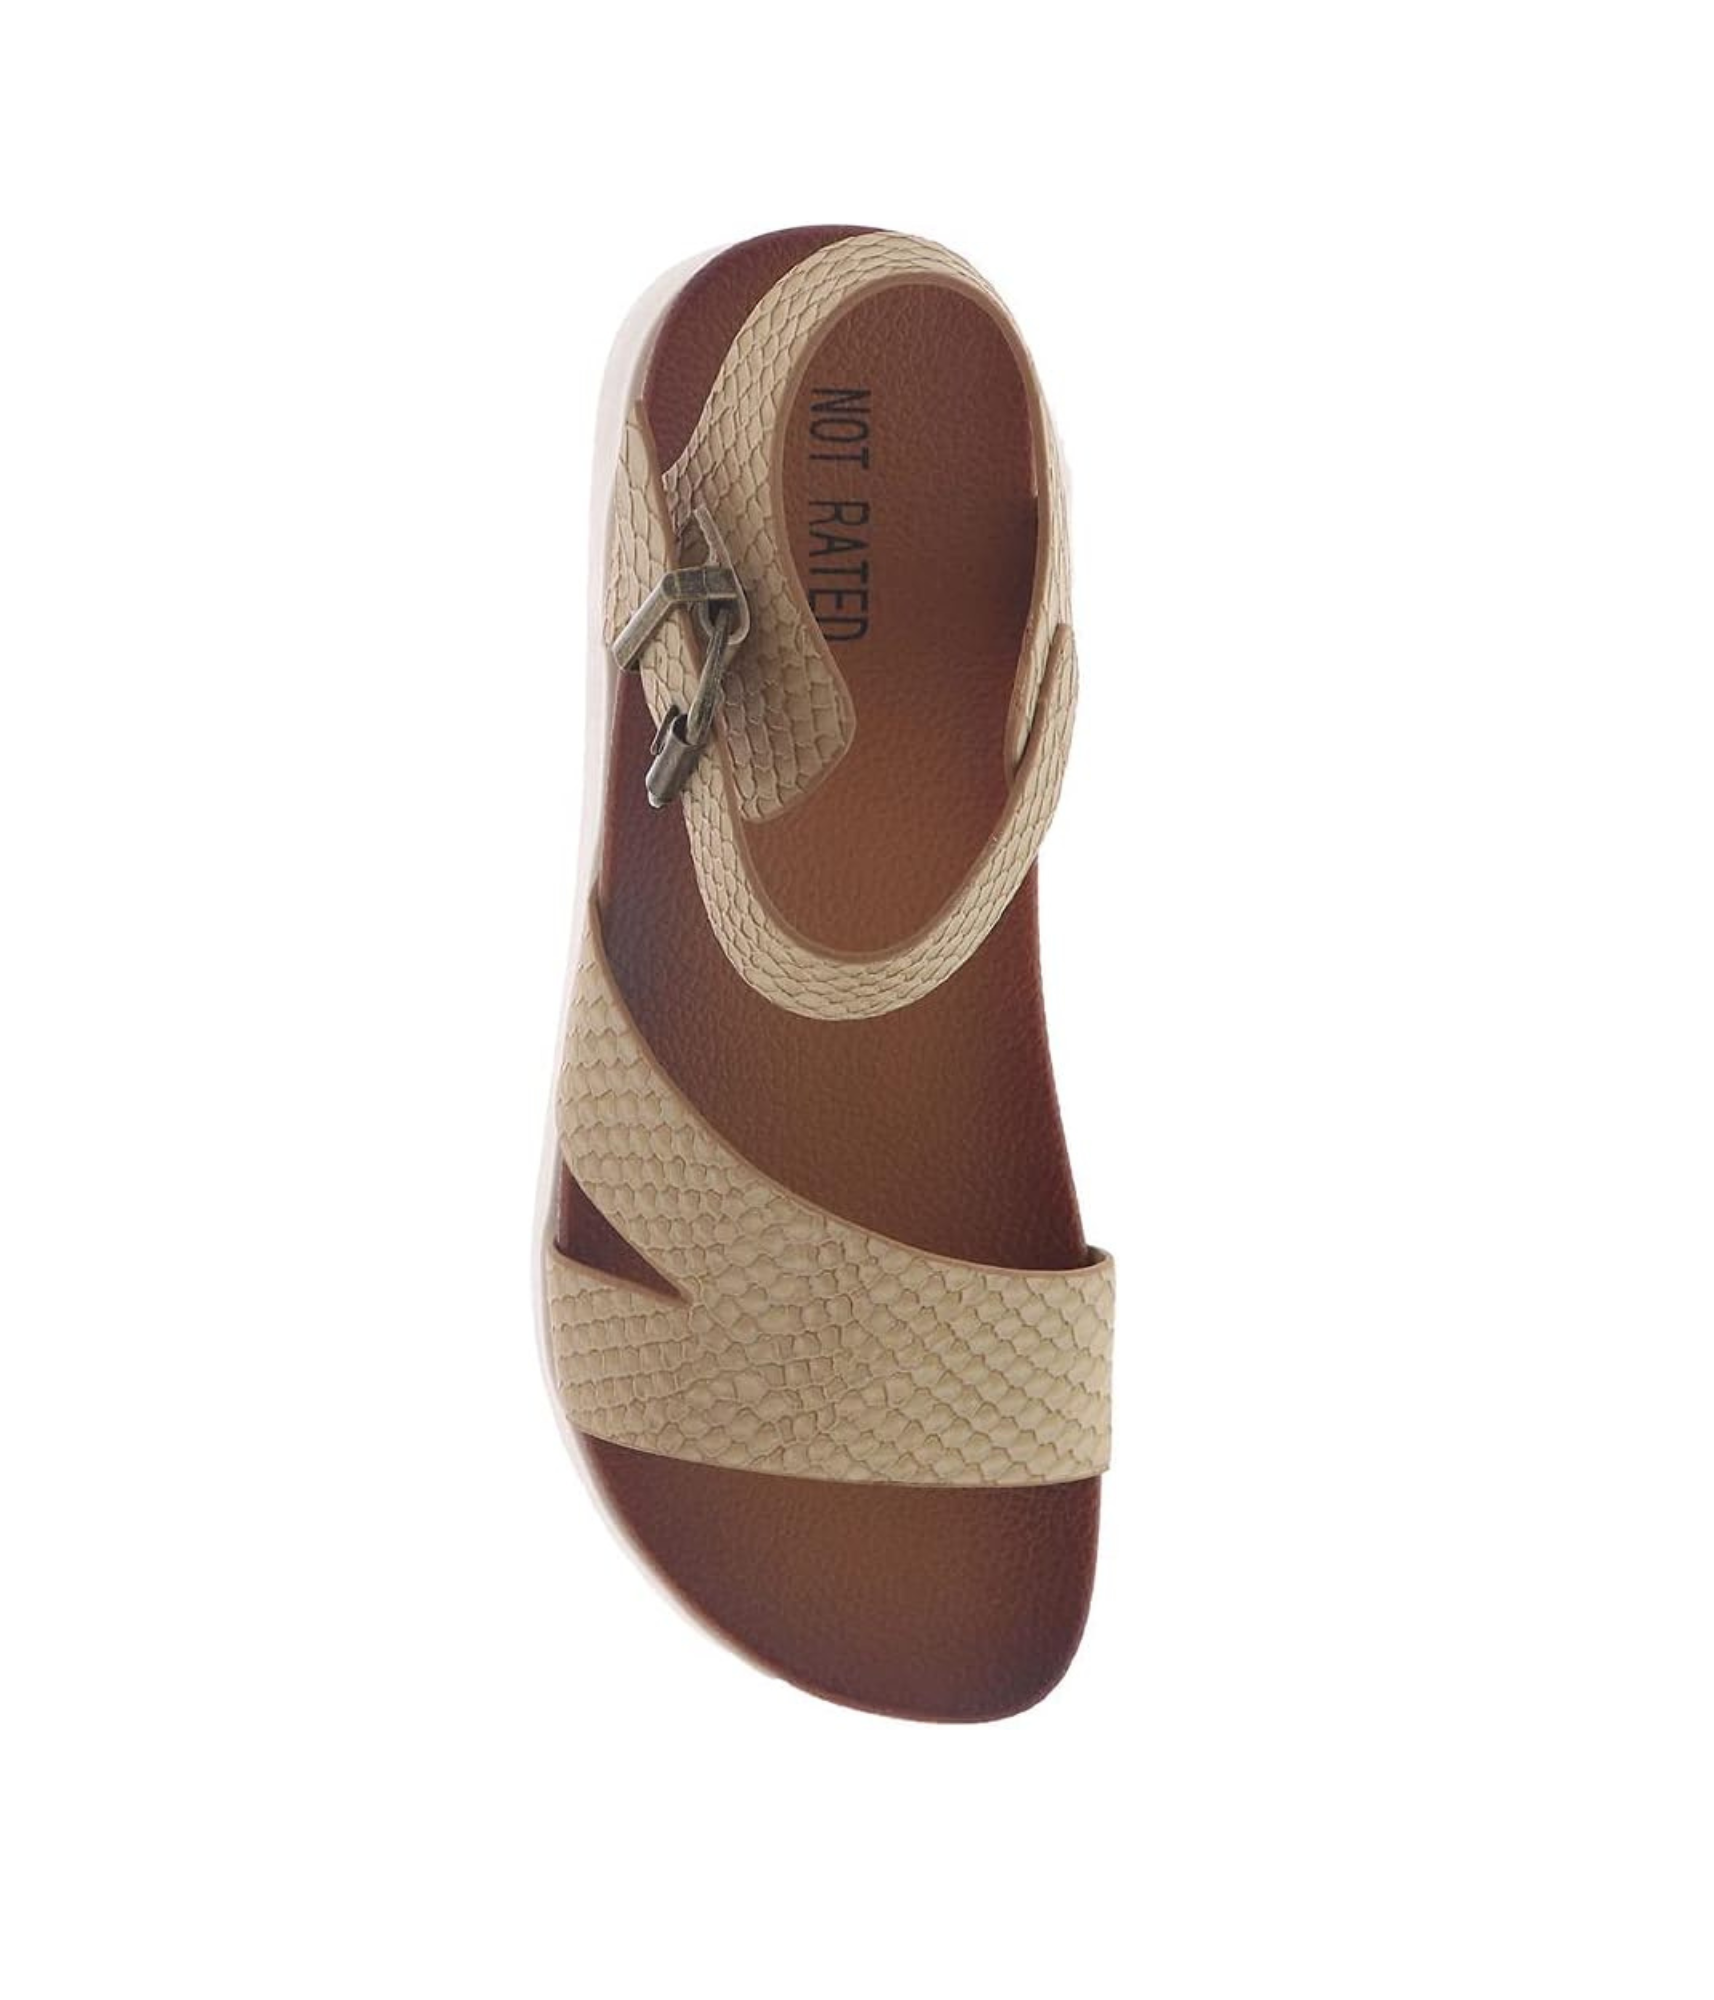 Carmel Sandals in Blush